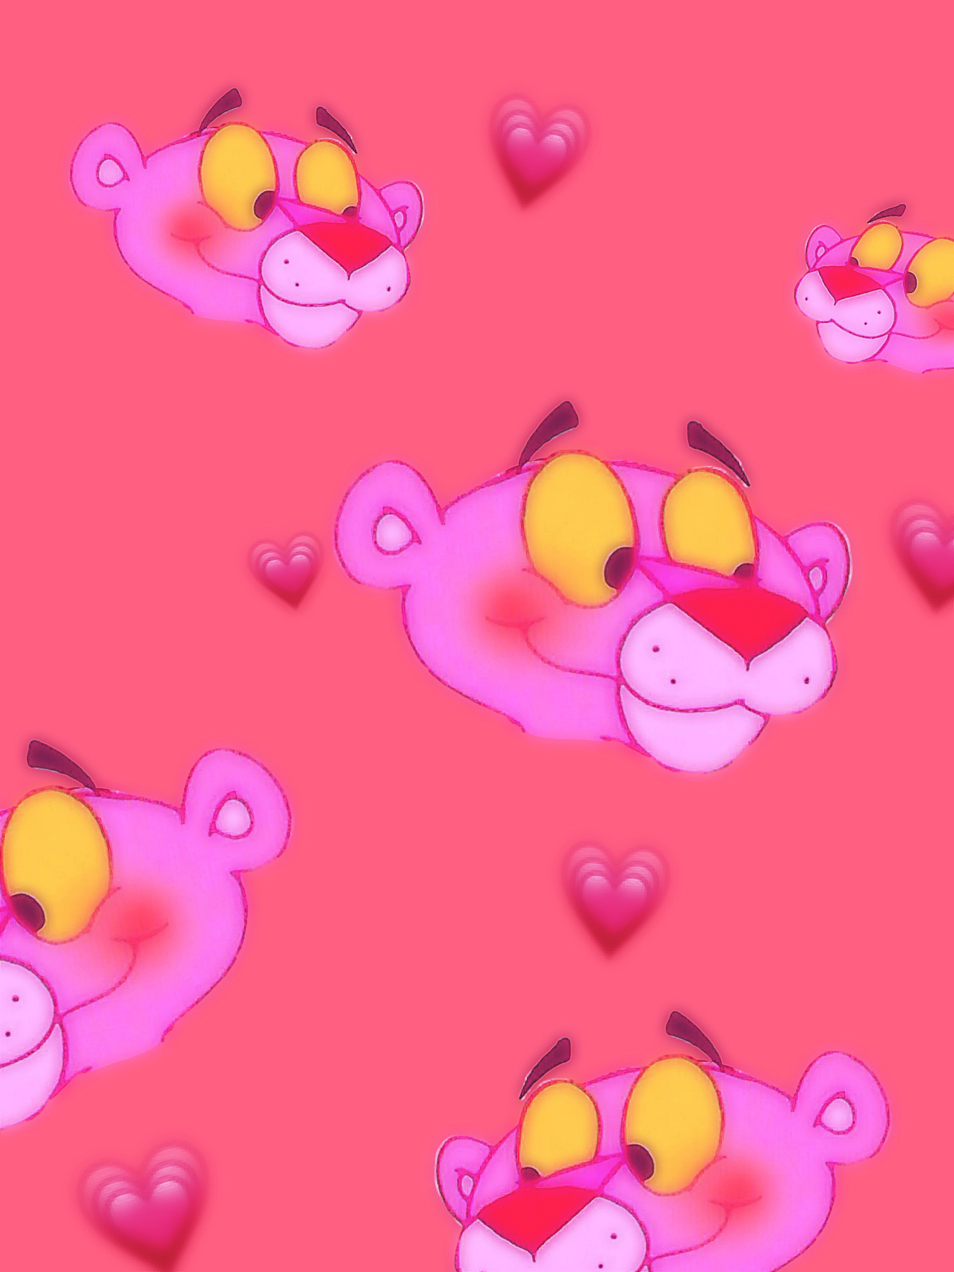 Pink Panther 完全無料画像検索のプリ画像 Bygmo